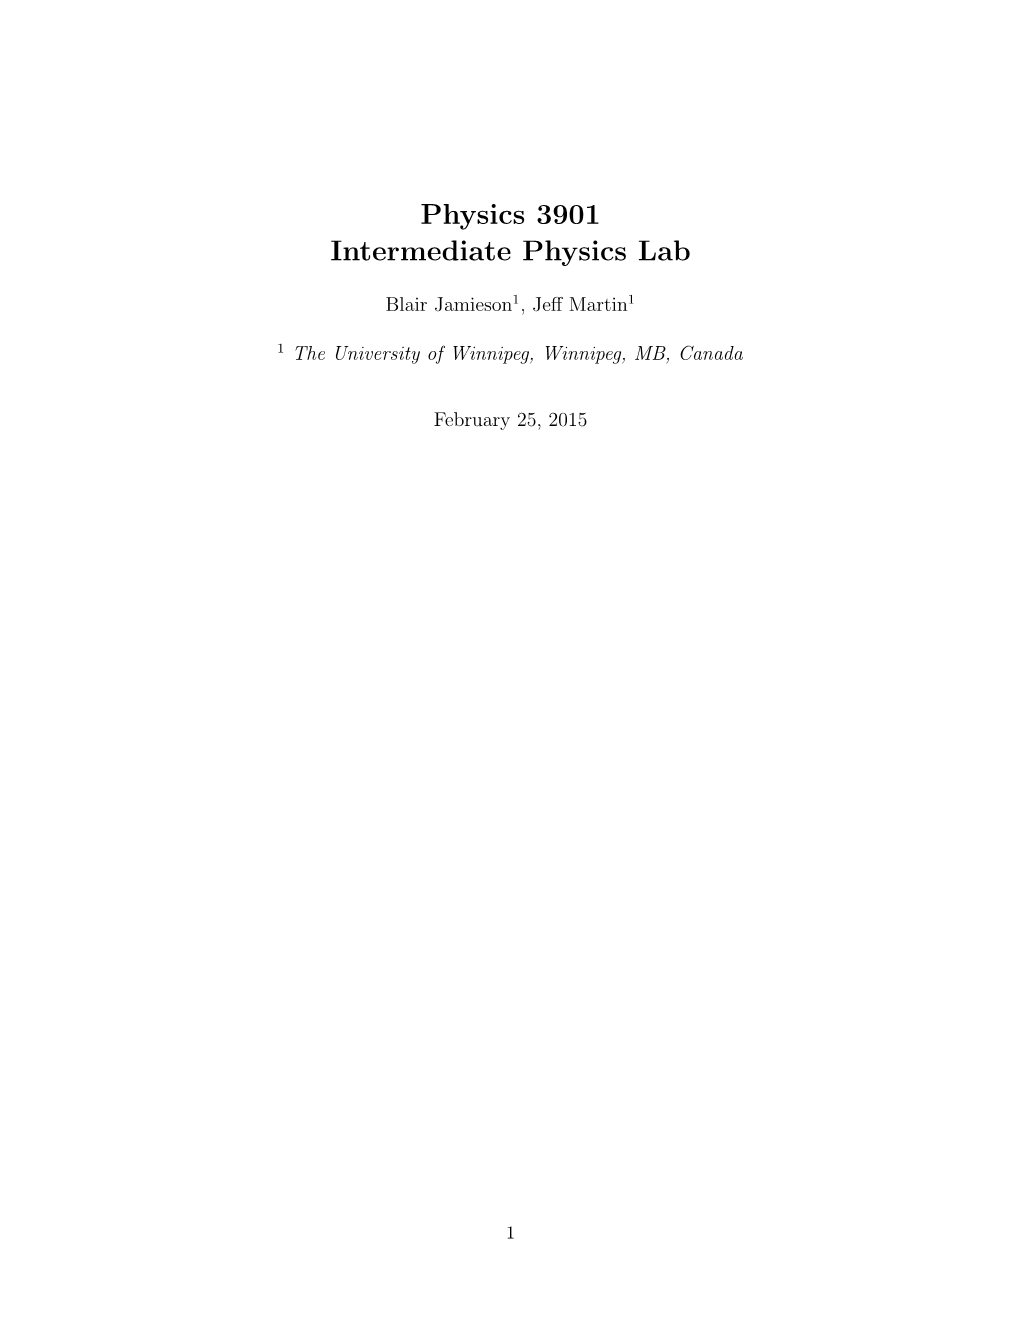 Physics 3901 Intermediate Physics Lab